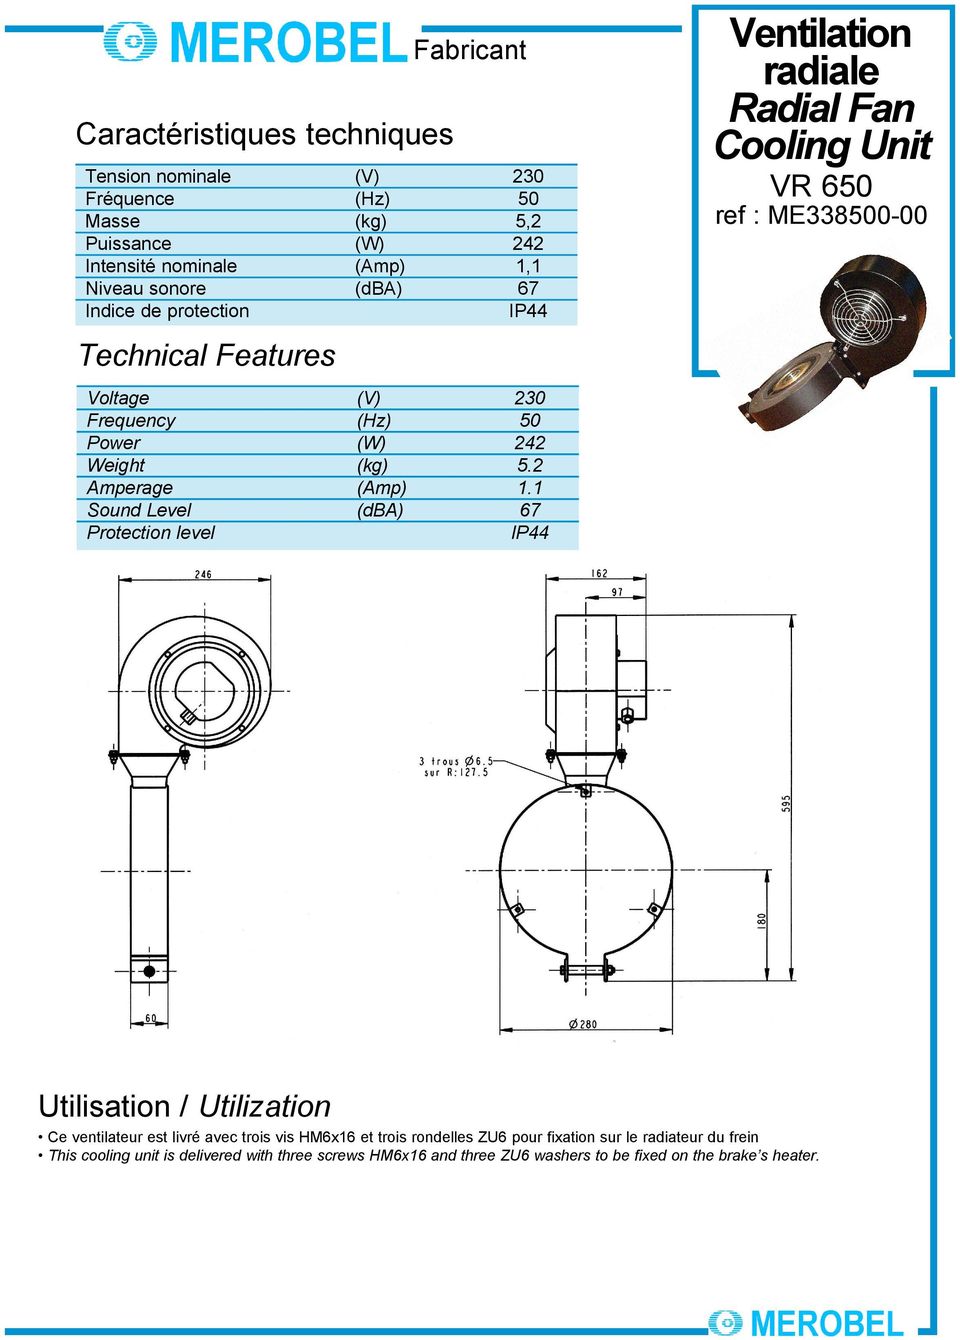 1 Sound Level (dba) 67 Protection level IP44 Ventilation radiale Radial Fan Cooling Unit VR 650 ref : ME338500-00 Utilisation / Utilization Ce ventilateur est